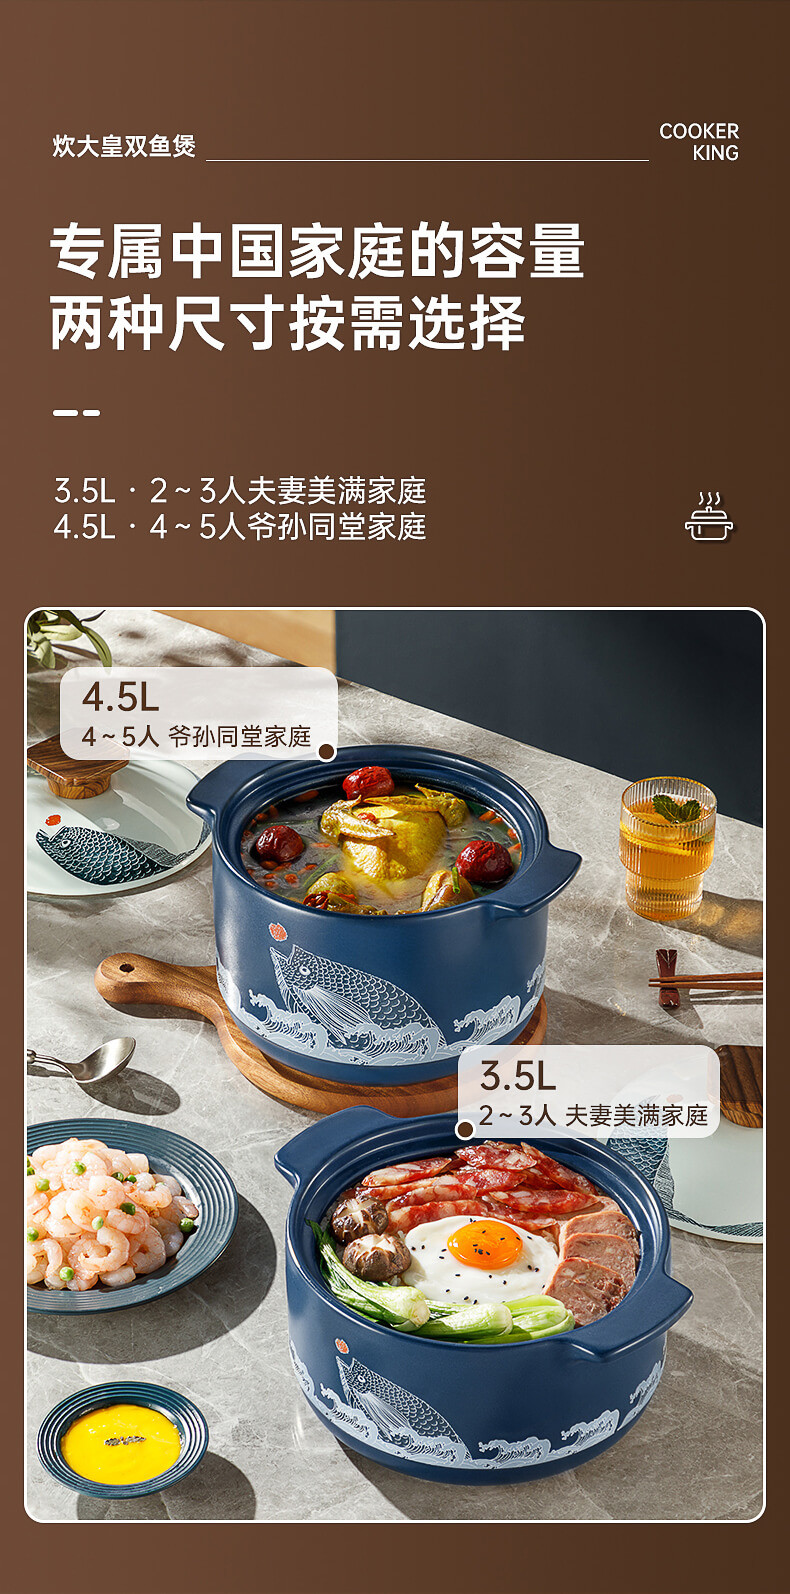 炊大皇/COOKER KING 国韵双鱼煲4.5L  TC45SY